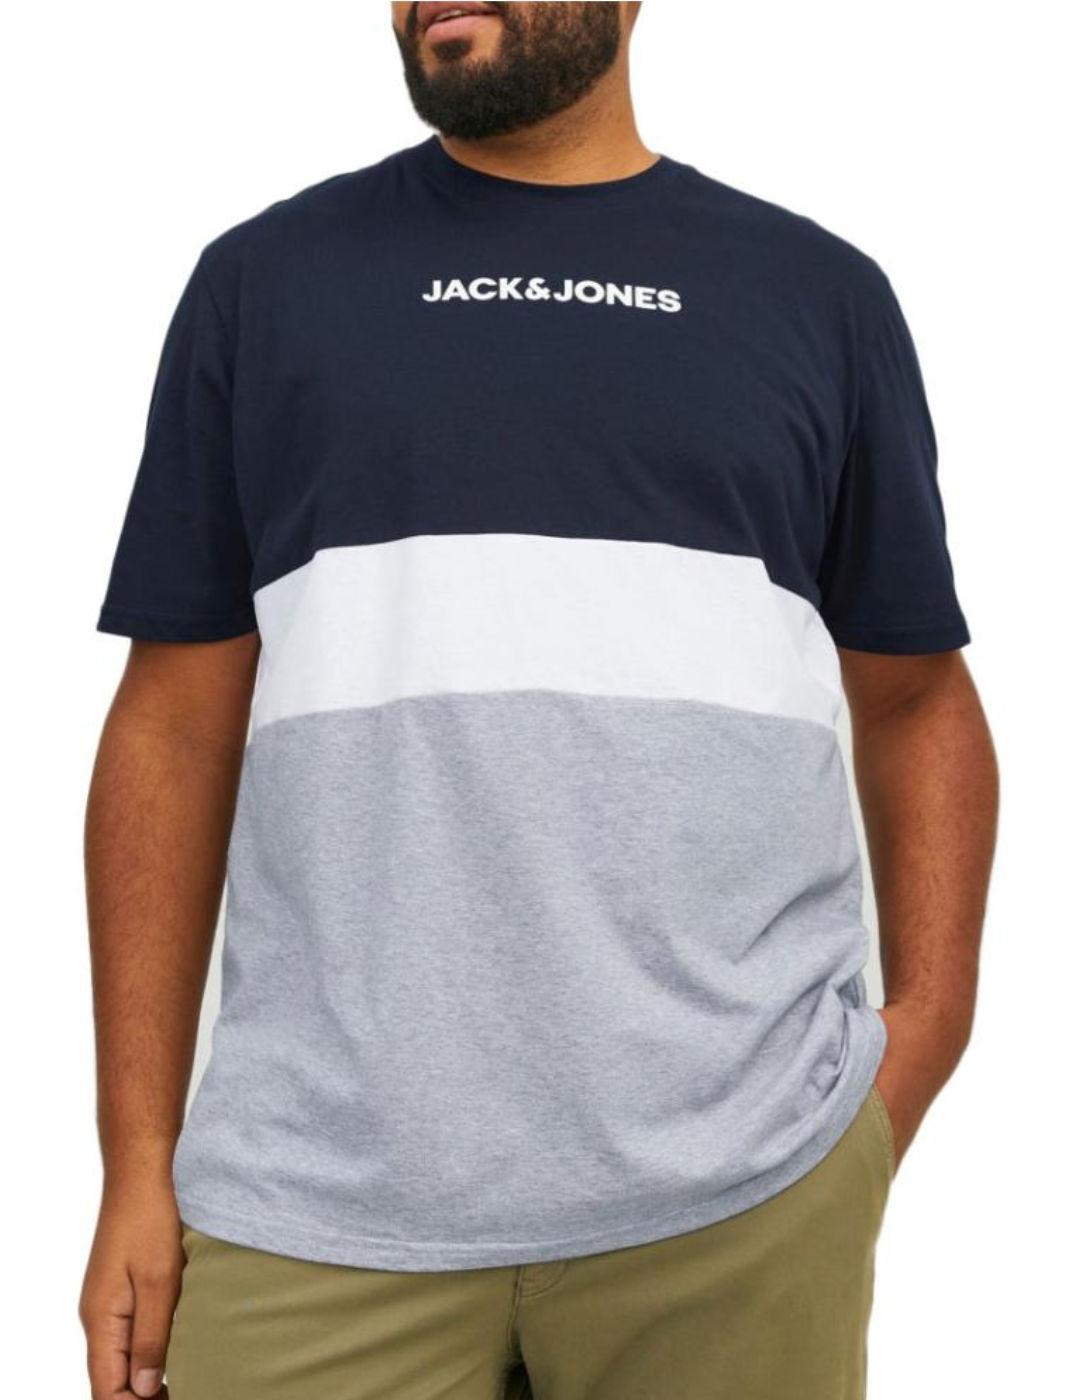 Camiseta Jack&Jones Ereid Plus azul/gris manga corta hombre